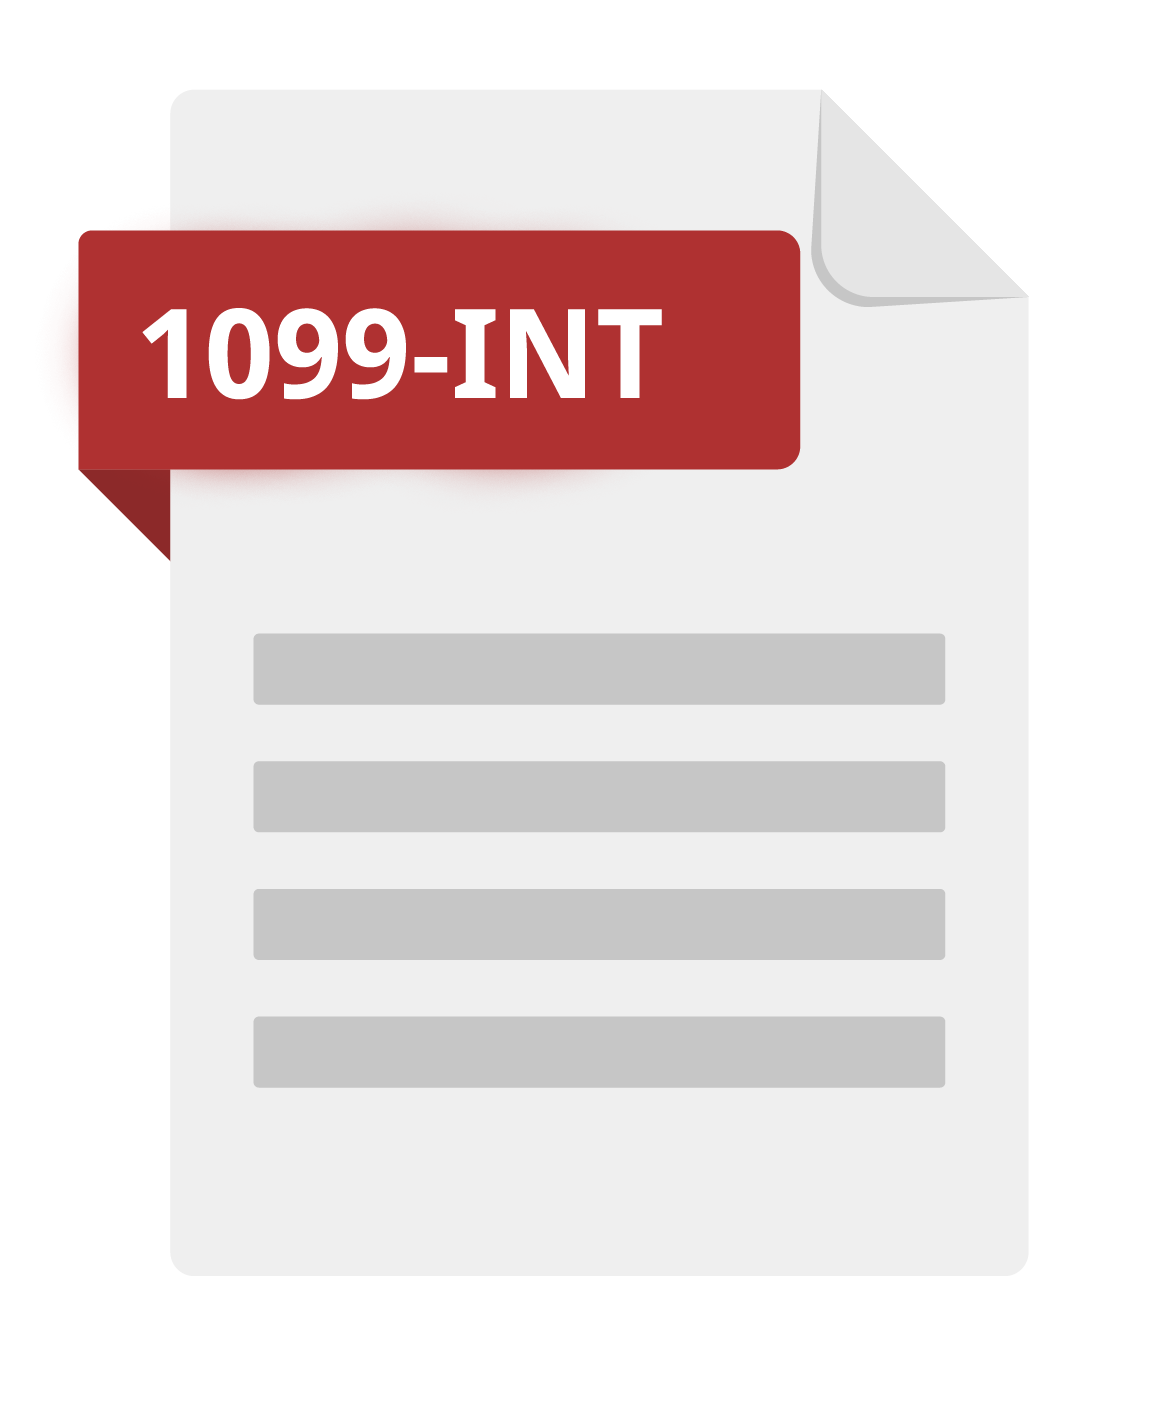 1099-INT